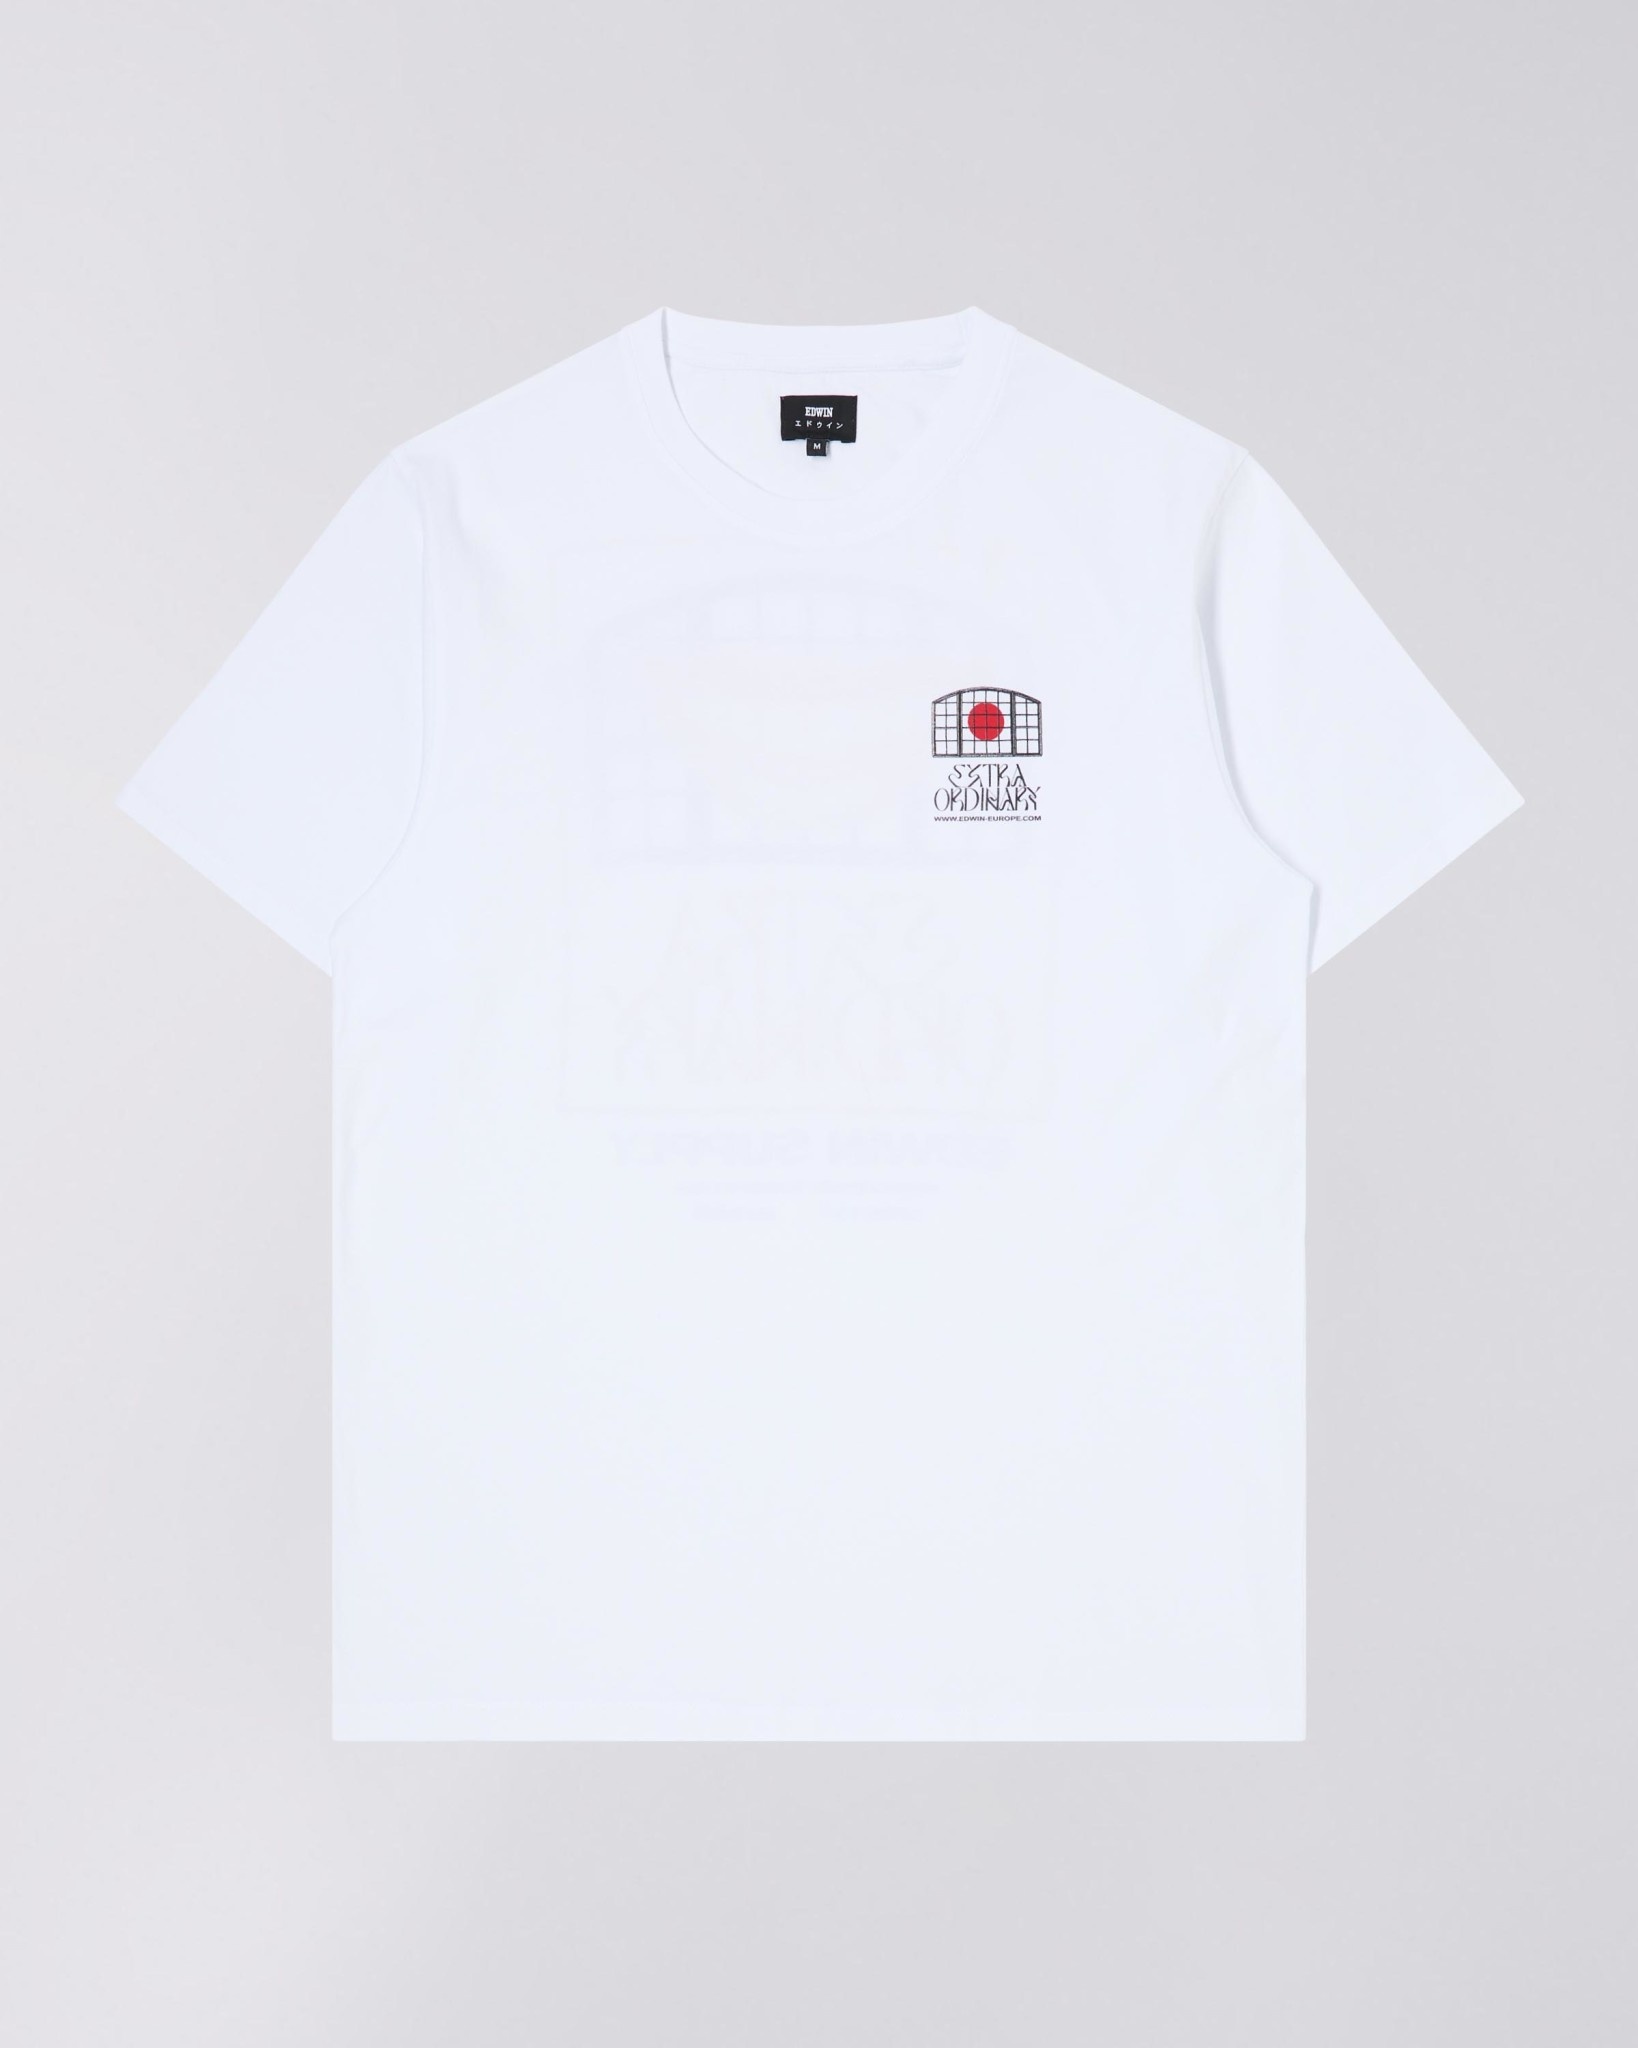 Extra Ordinary T-Shirt White-2